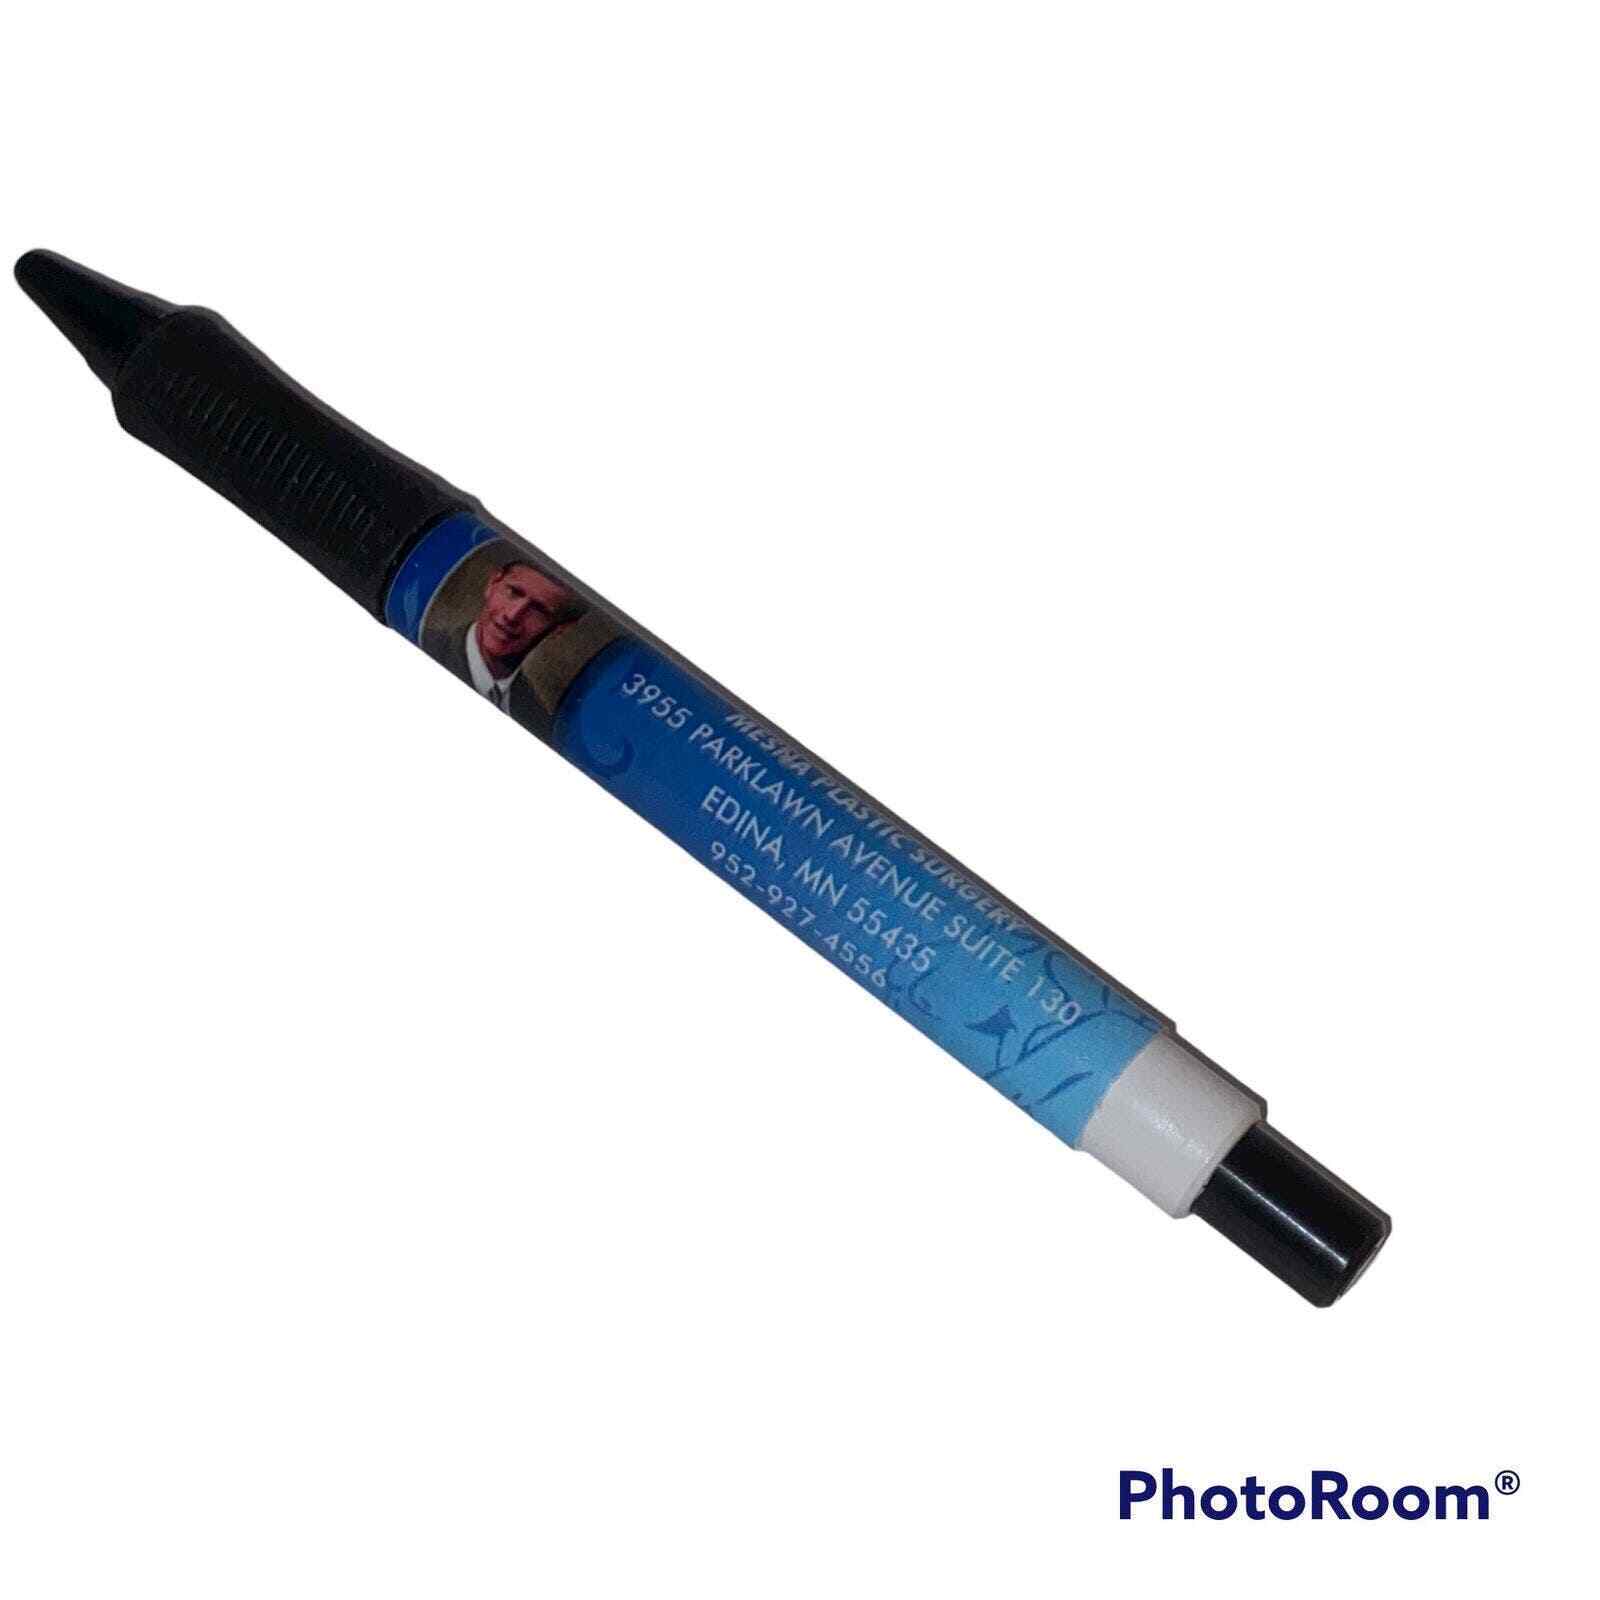 Mesna Plastic Surgery Pen Advertising Click Ballpoint Cushion Grip Writing